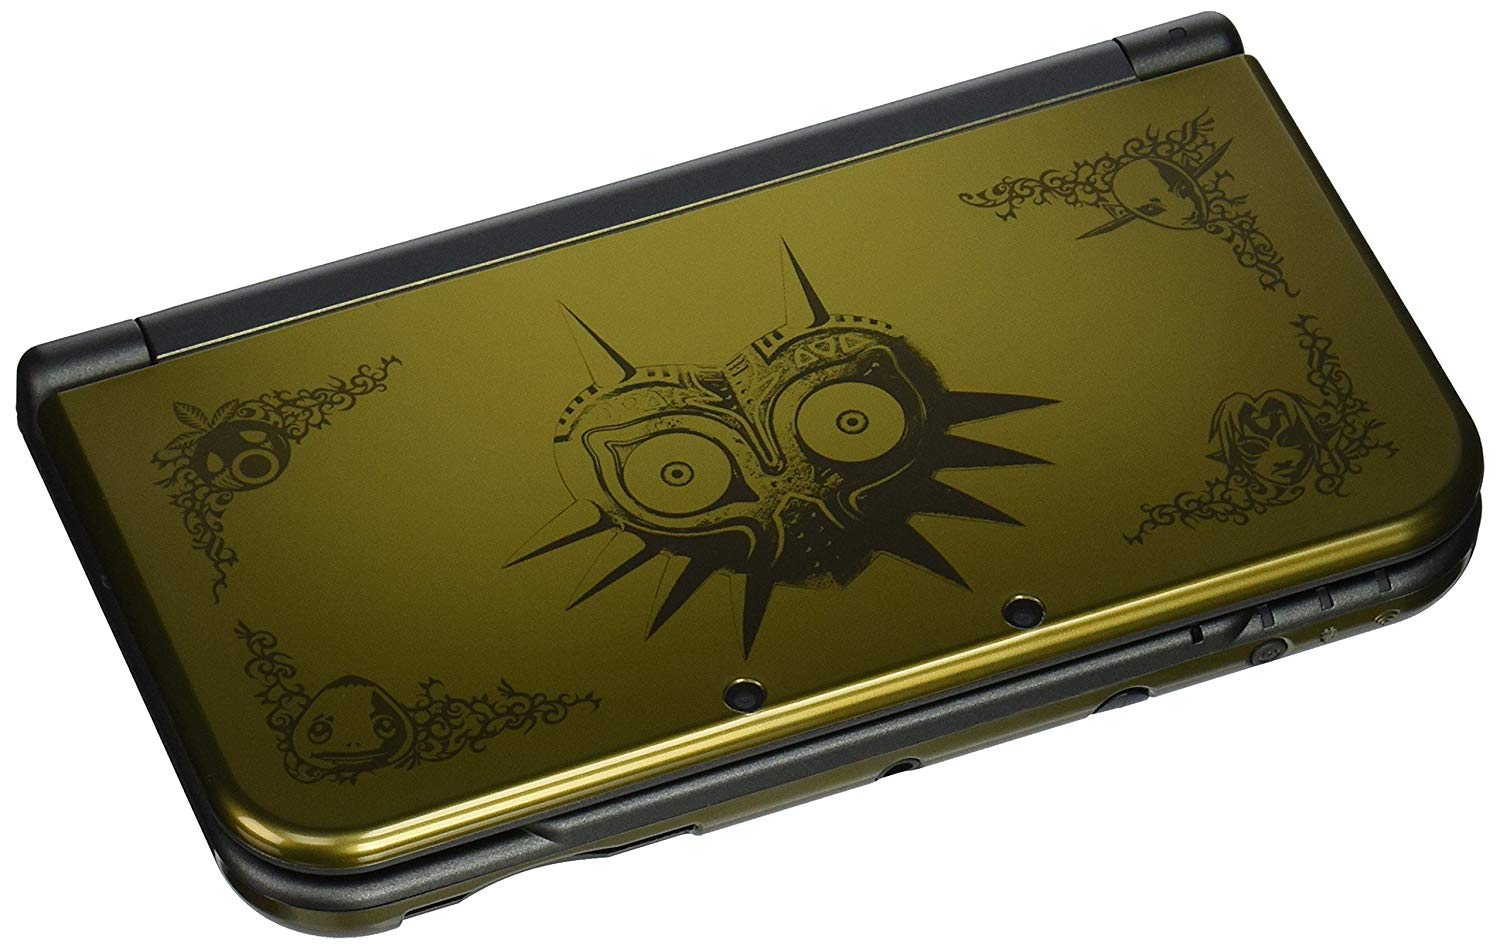 Nintendo - New 3DS XL Legend of Zelda: Majora's Mask Limited Edition - Gold/Black Consoles Nintendo   